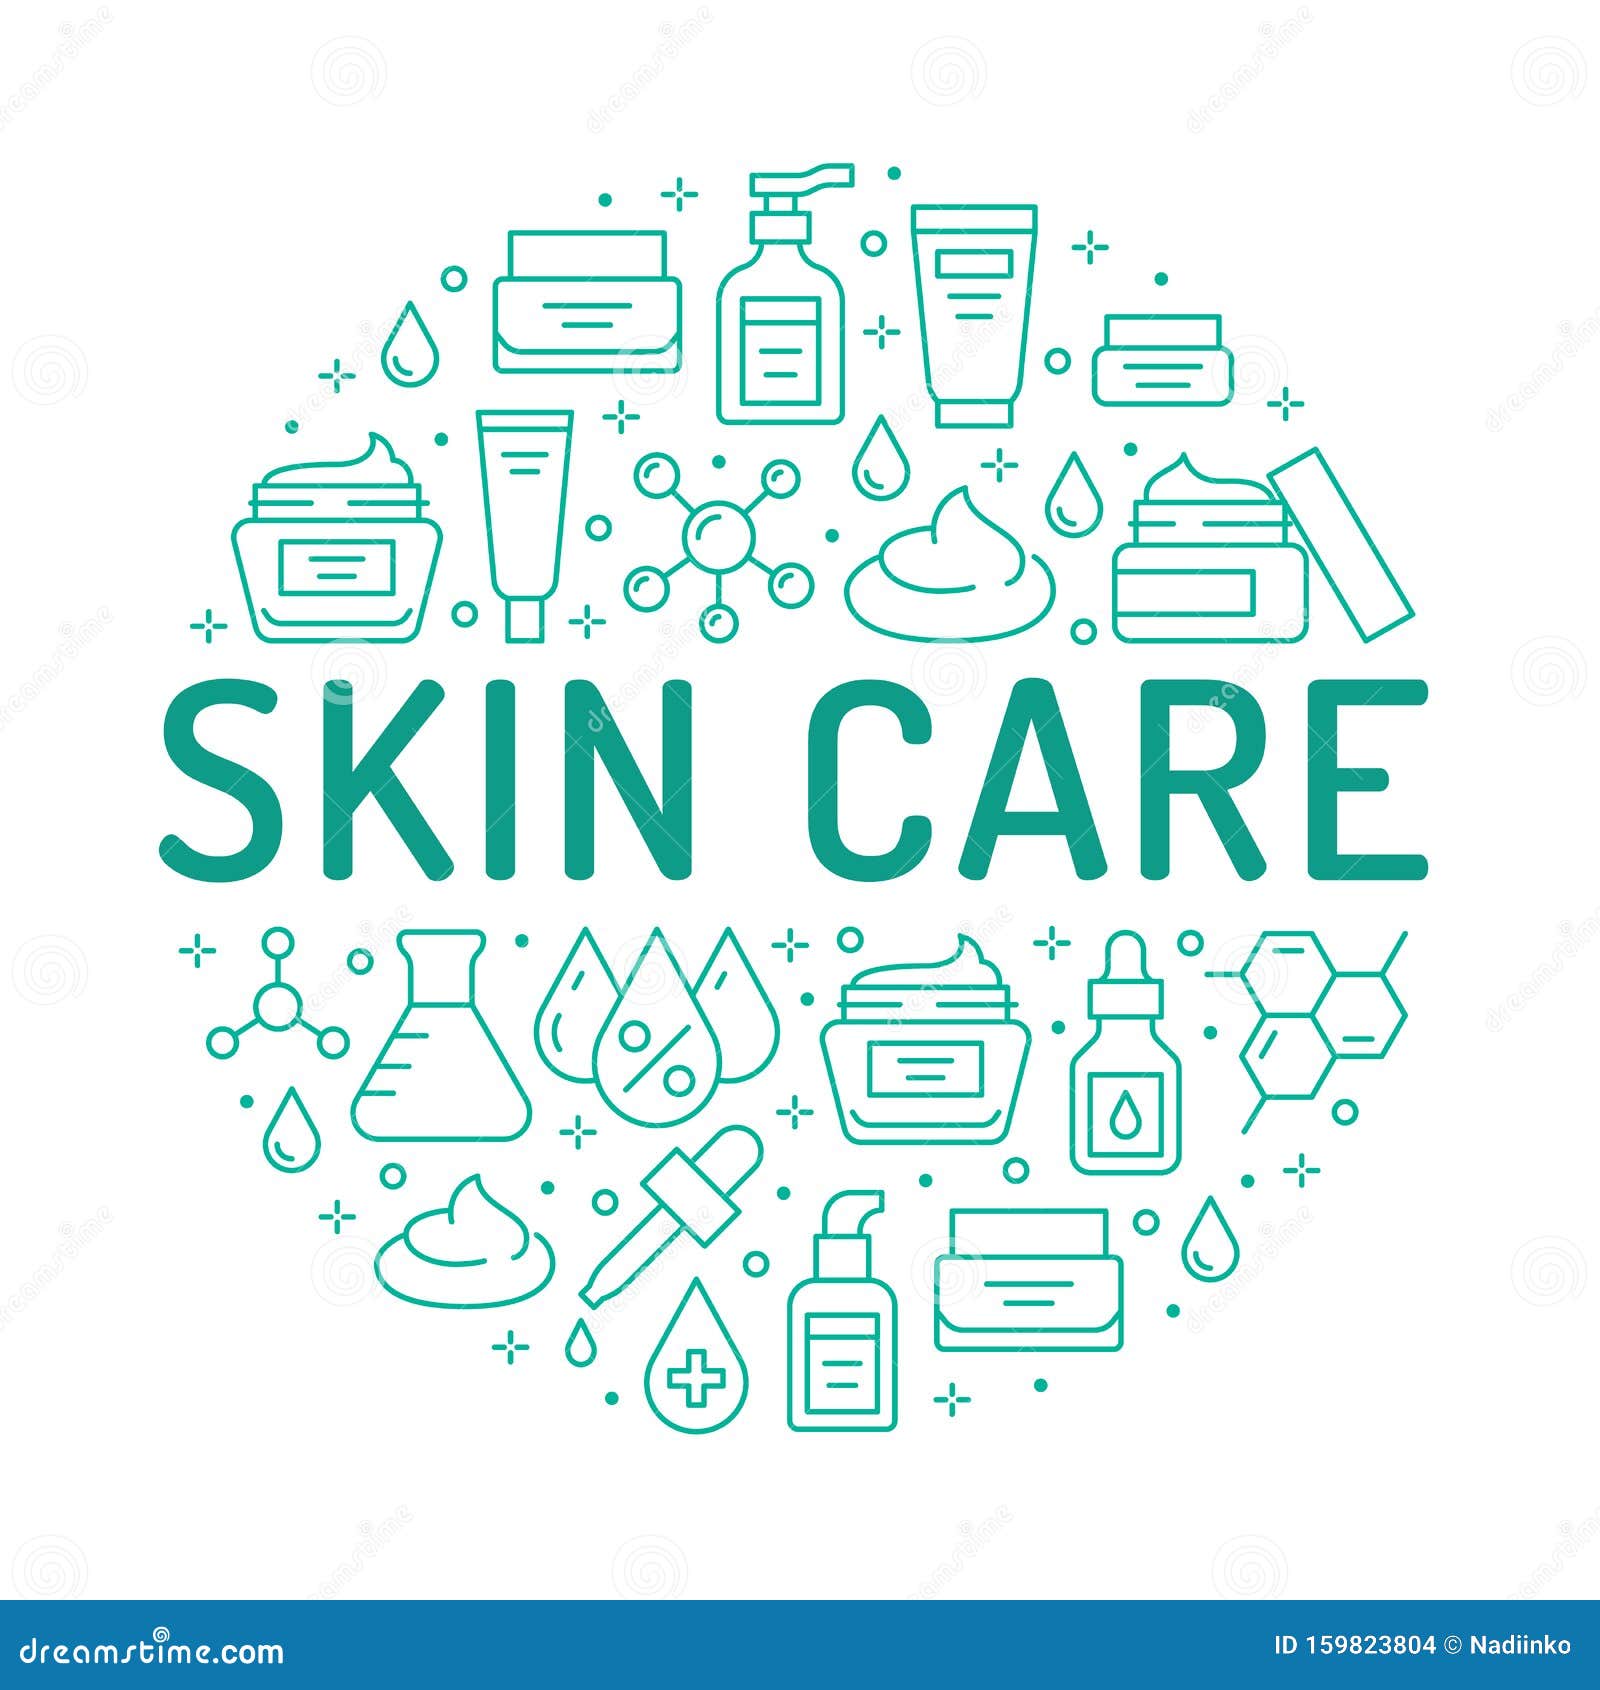 skin care circle poster with flat line icons. hyaluronic acid drop, serum, anti ageing compound retinol, moisturizing